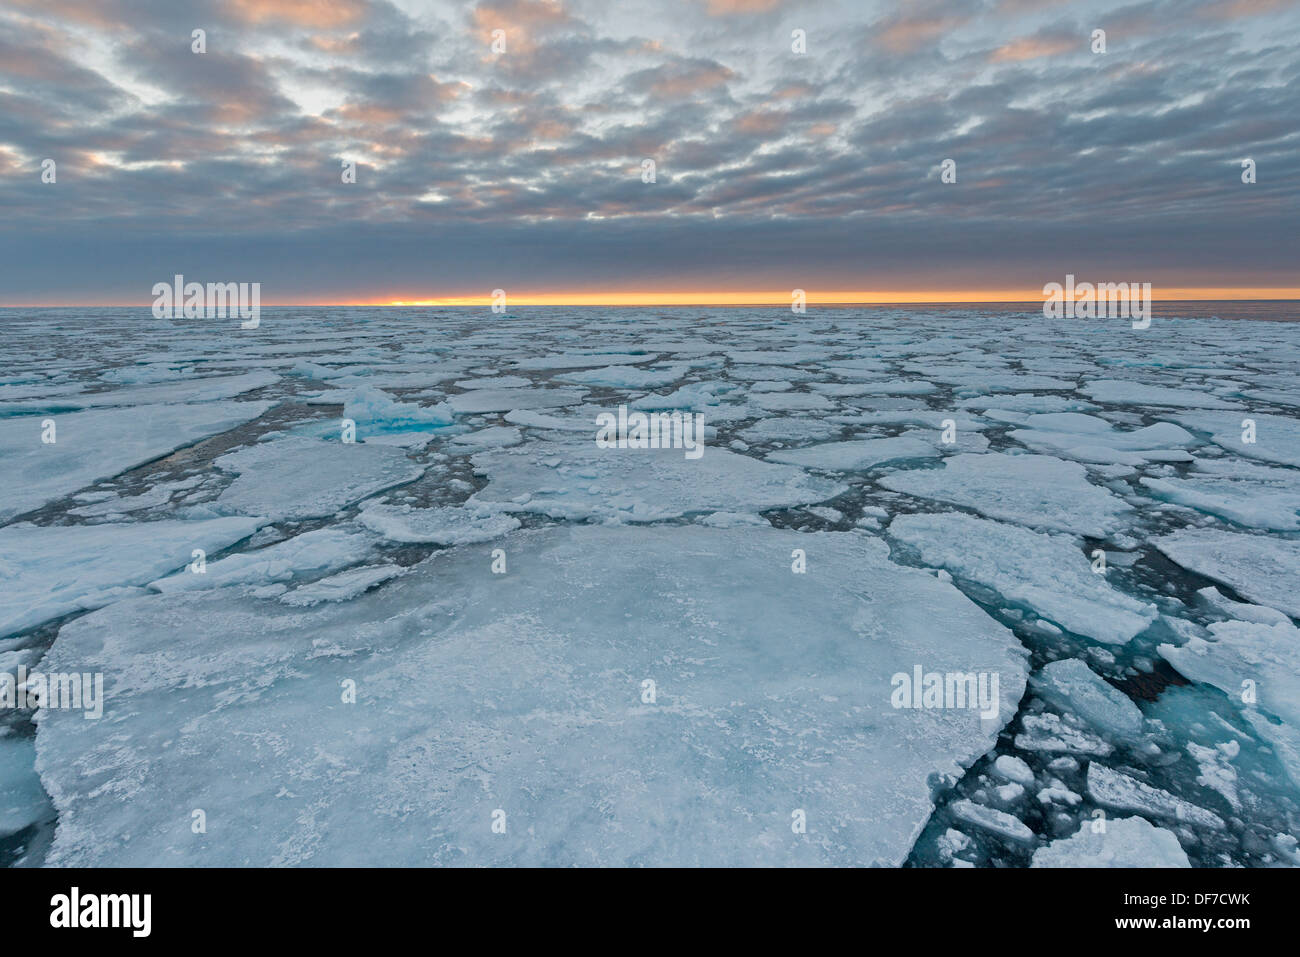 Ice floes, pack ghiaccio, atmosfera serale, Oceano Artico, isola Spitsbergen, arcipelago delle Svalbard Isole Svalbard e Jan Mayen, Norvegia Foto Stock